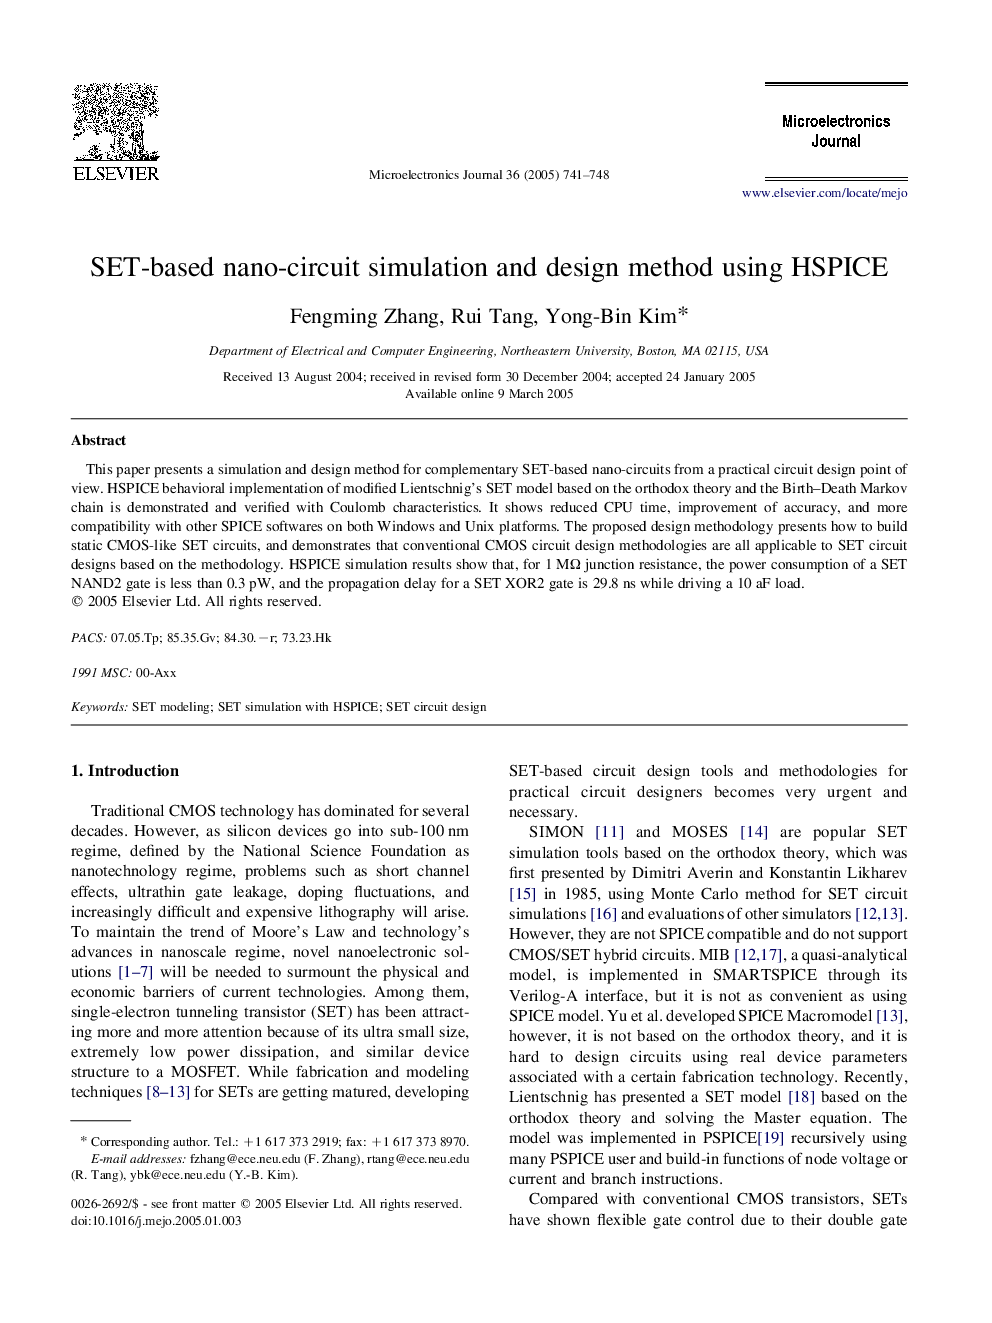 SET-based nano-circuit simulation and design method using HSPICE